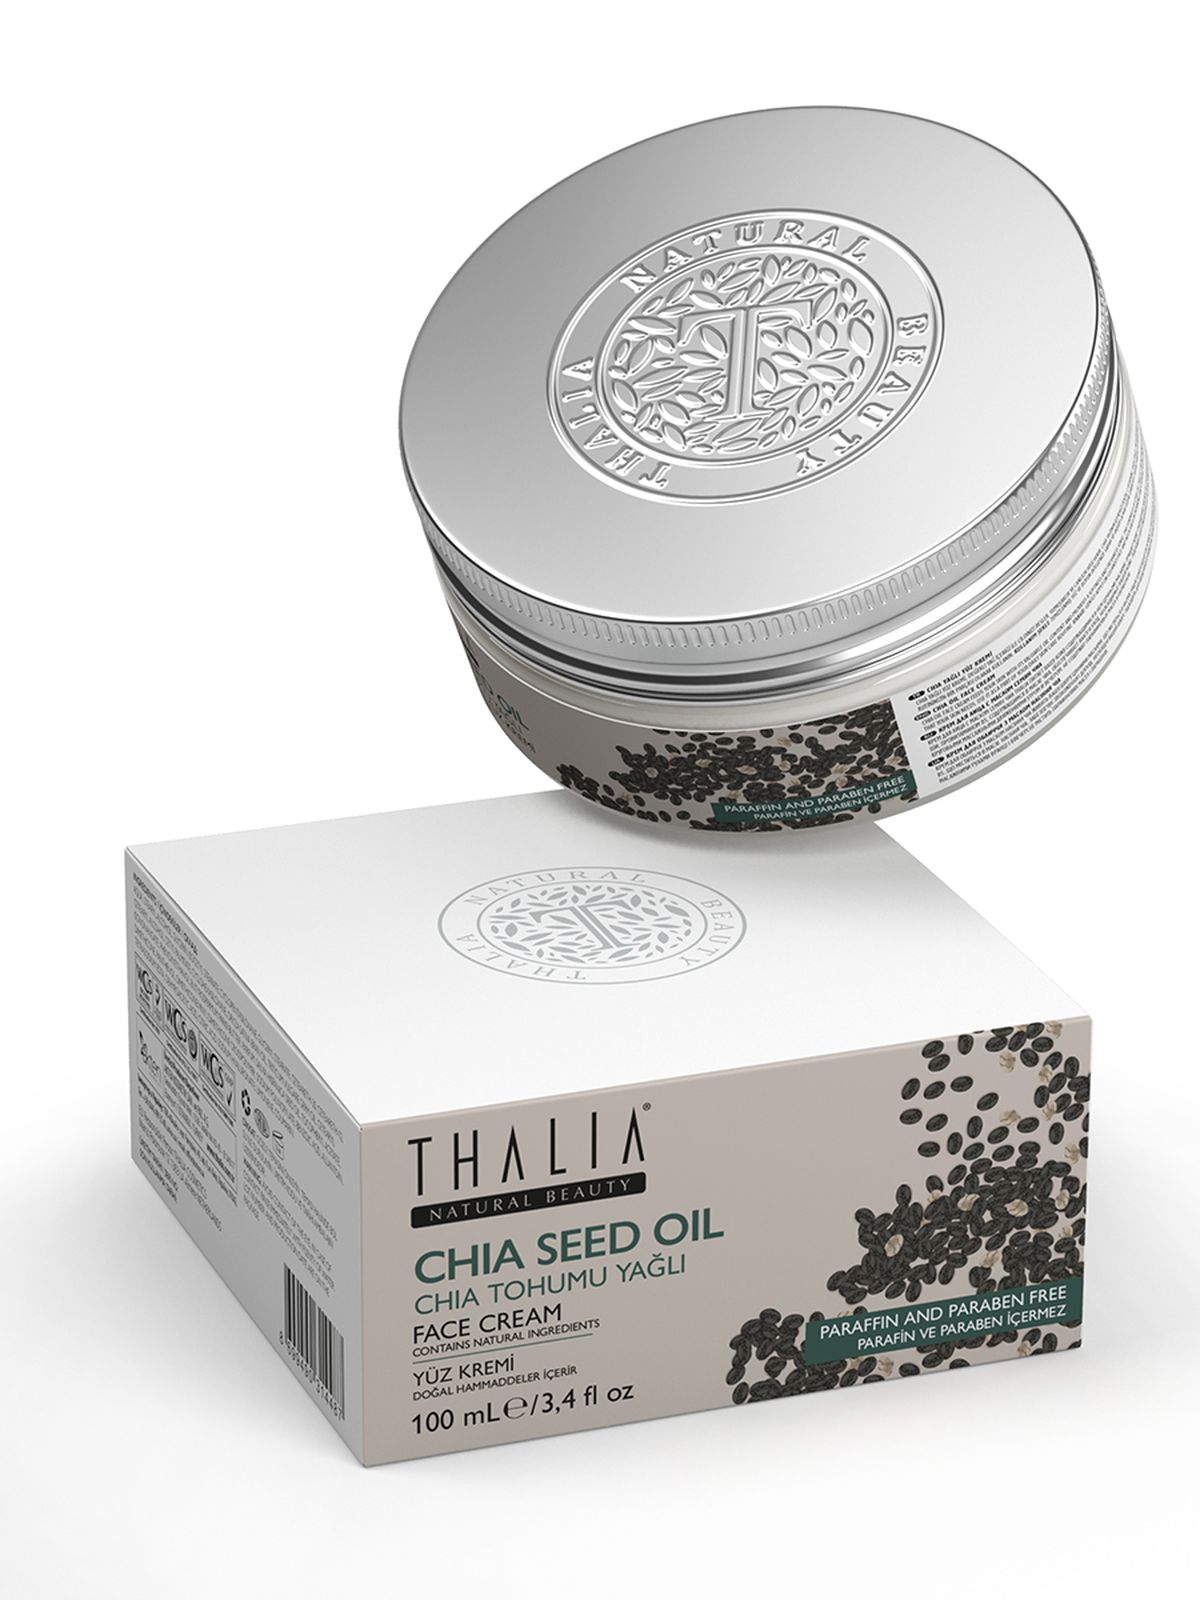 Питательный крем для лица Thalia Natural Beauty Chia Seed Oil Face Cream, 100 мл